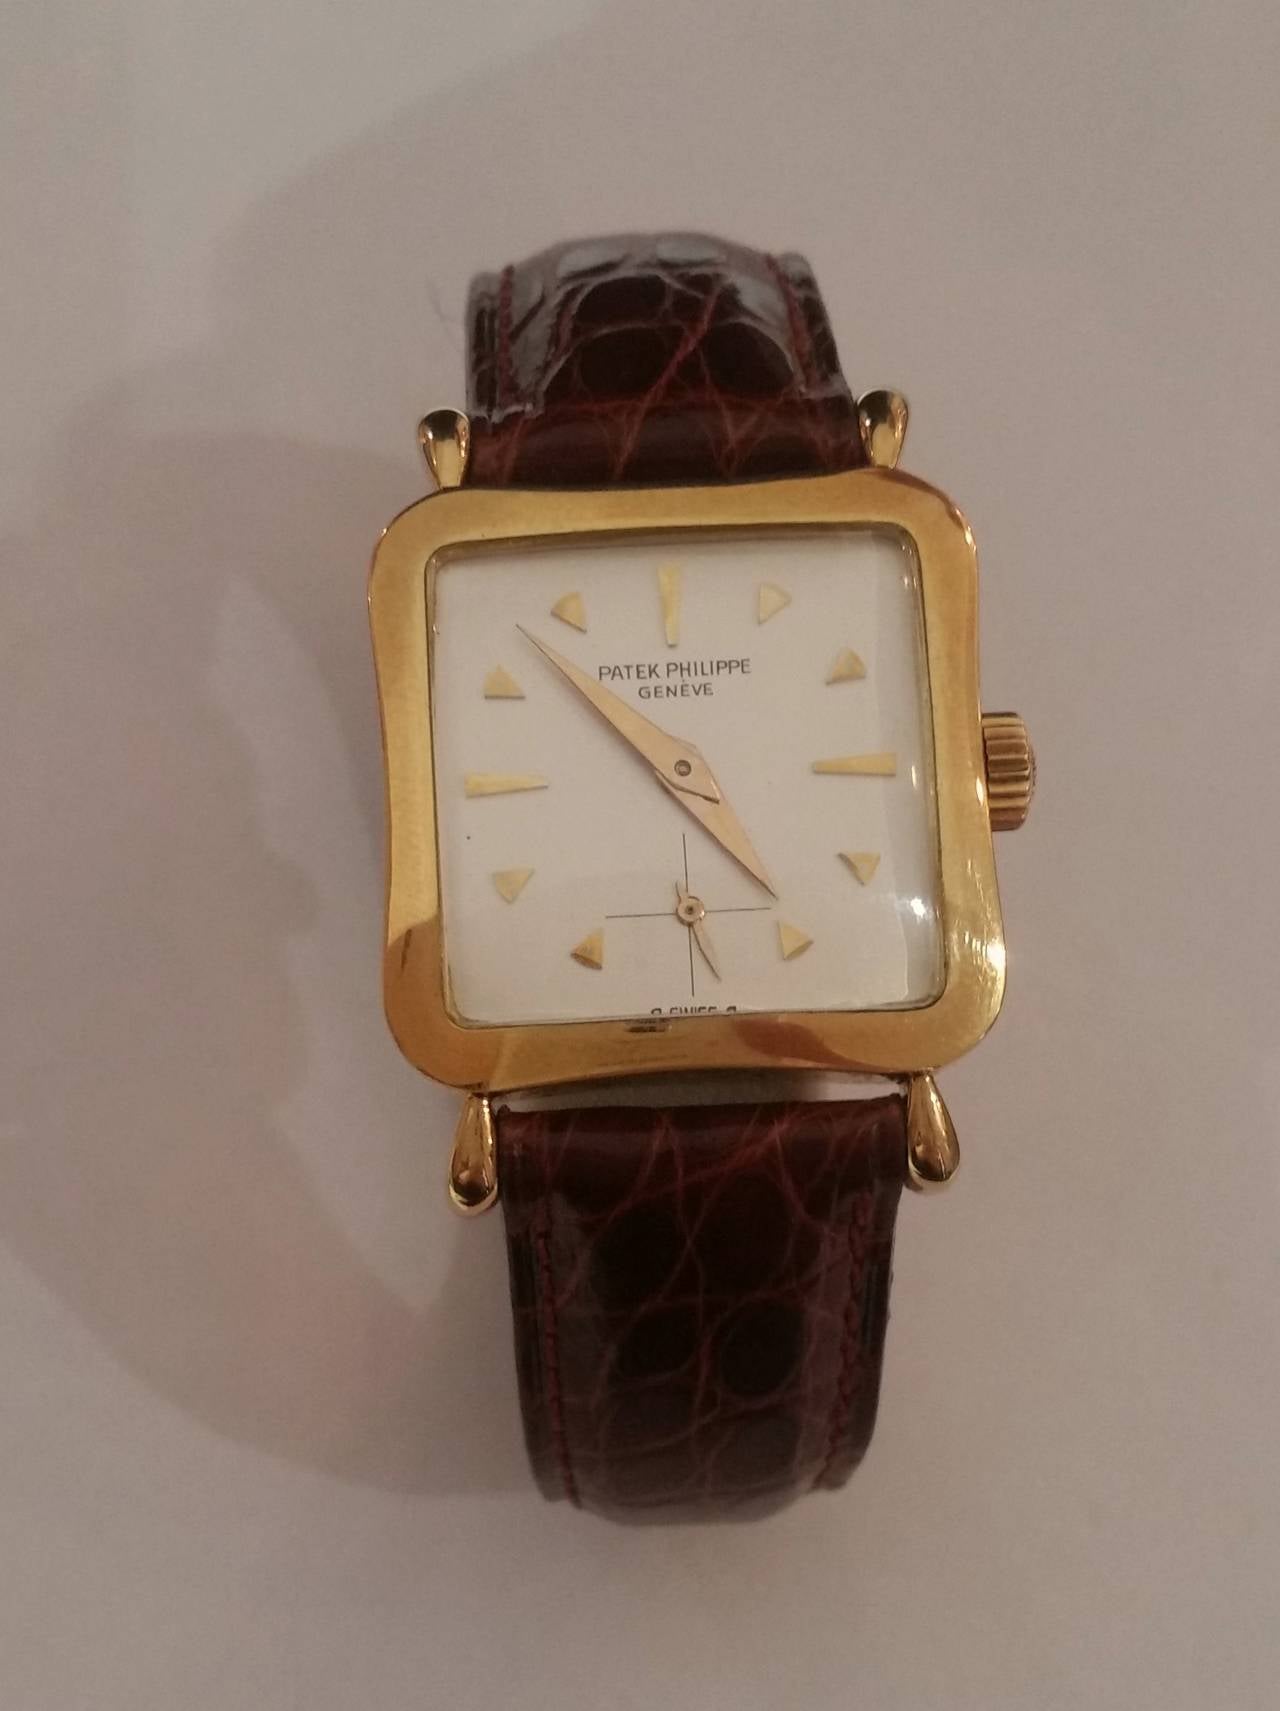 Fine and rare, concave and square gold wristwatch.
Deployant Clasp
Patek Philippe Geneva
Ref. 2513
Cal. 10-200
Mov. 745799